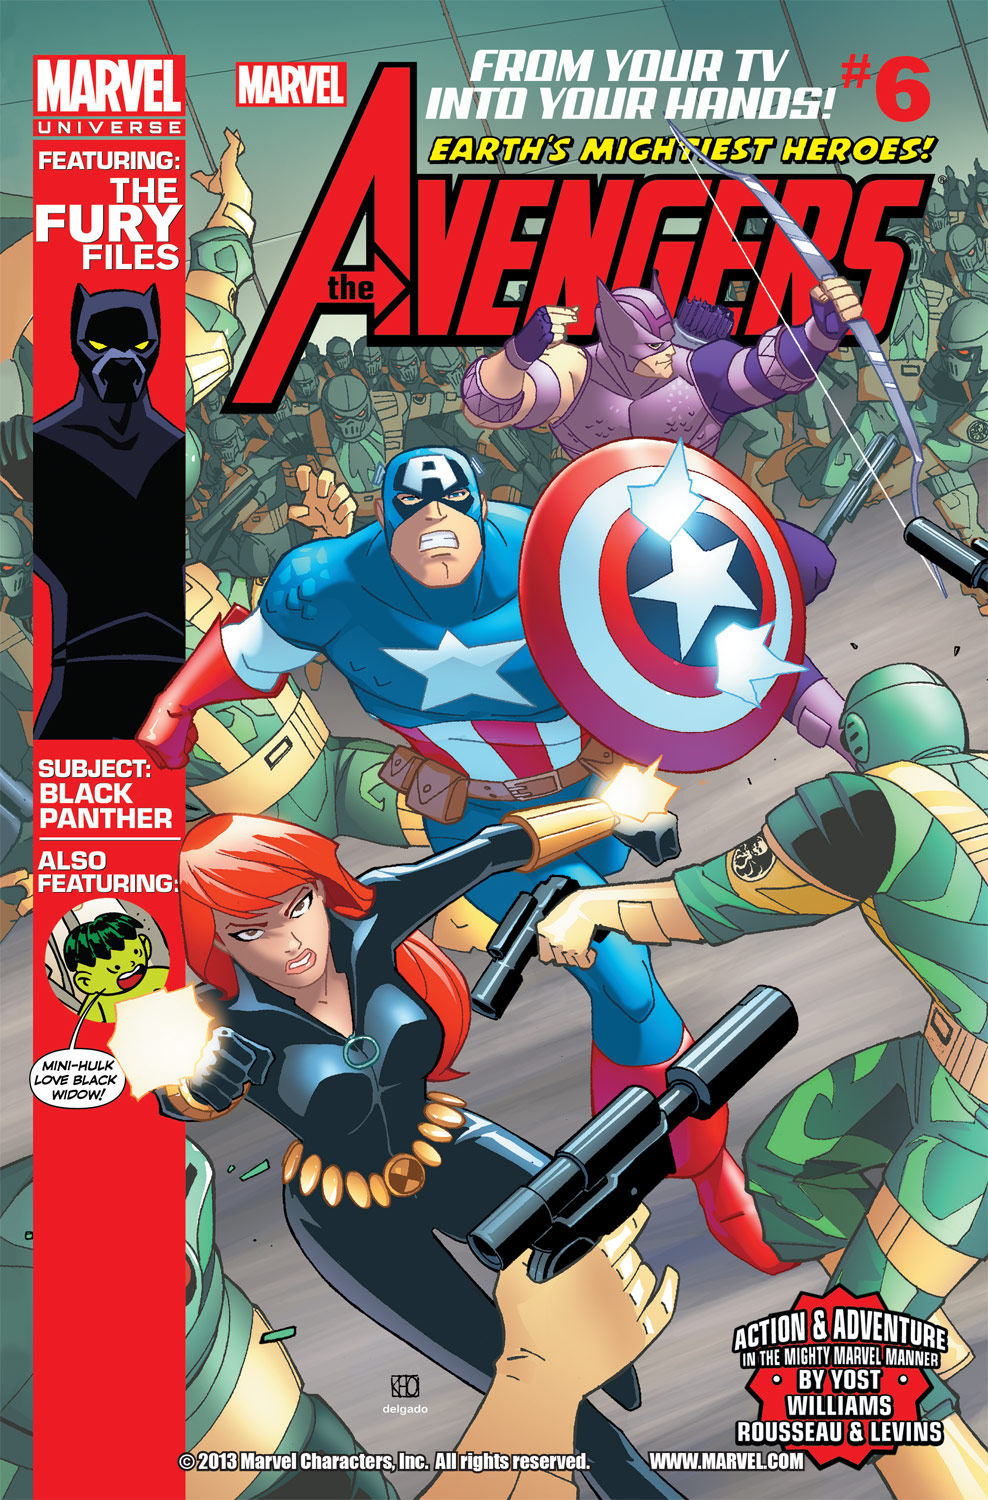 Marvel Universe Avengers: Earth's Mightiest Heroes (2012) #6